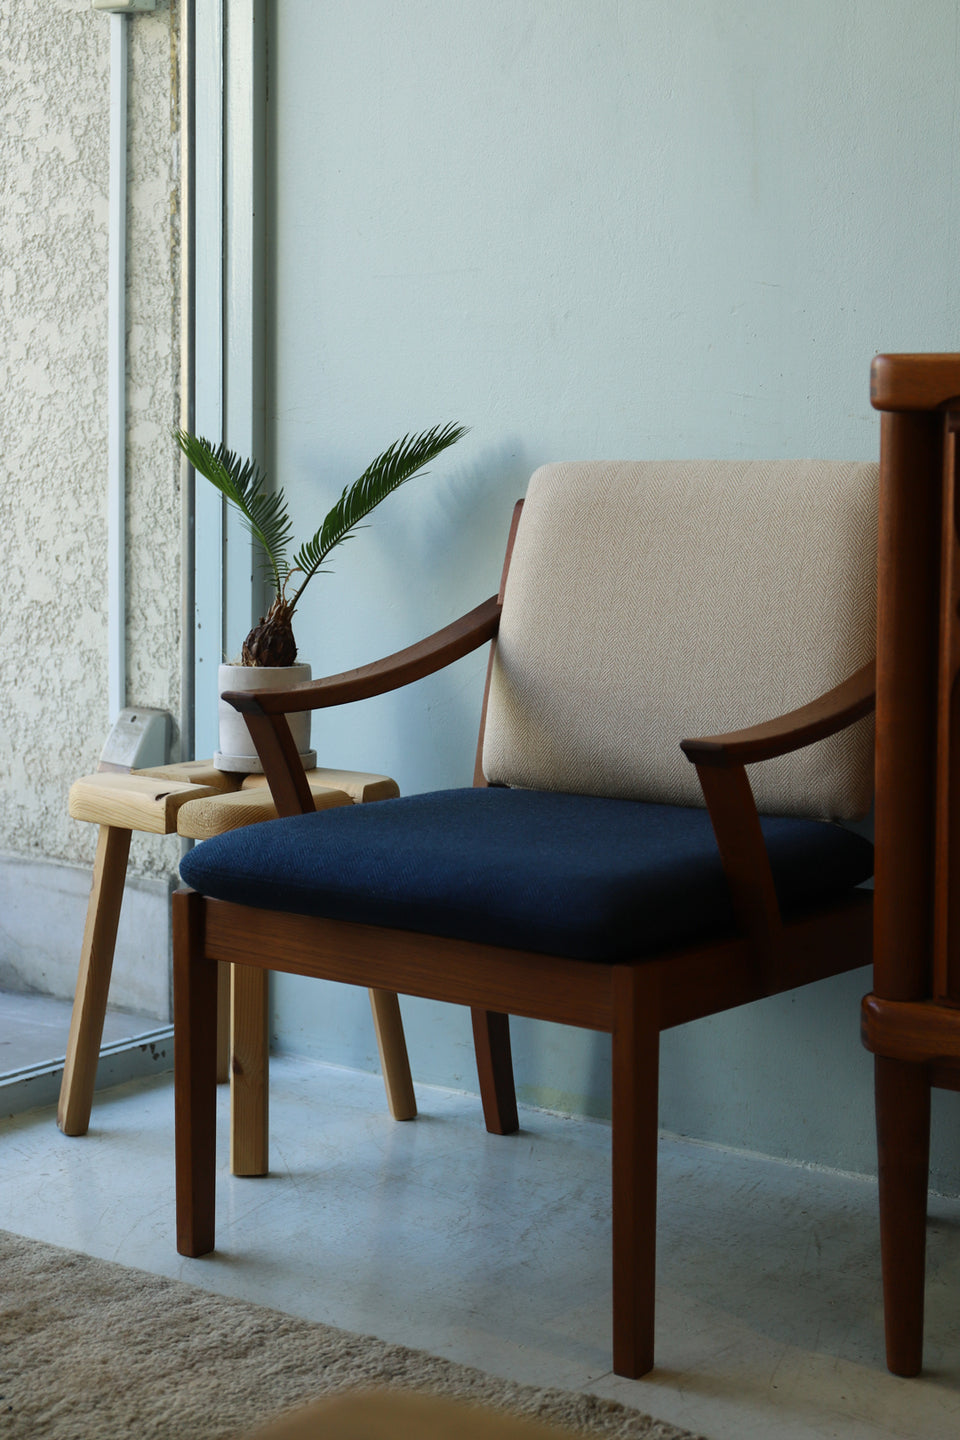 Japanese Vintage Teakwood Lounge Chair/ジャパンヴィンテージ ラウンジチェア アームチェア チーク材 椅子 北欧モダン